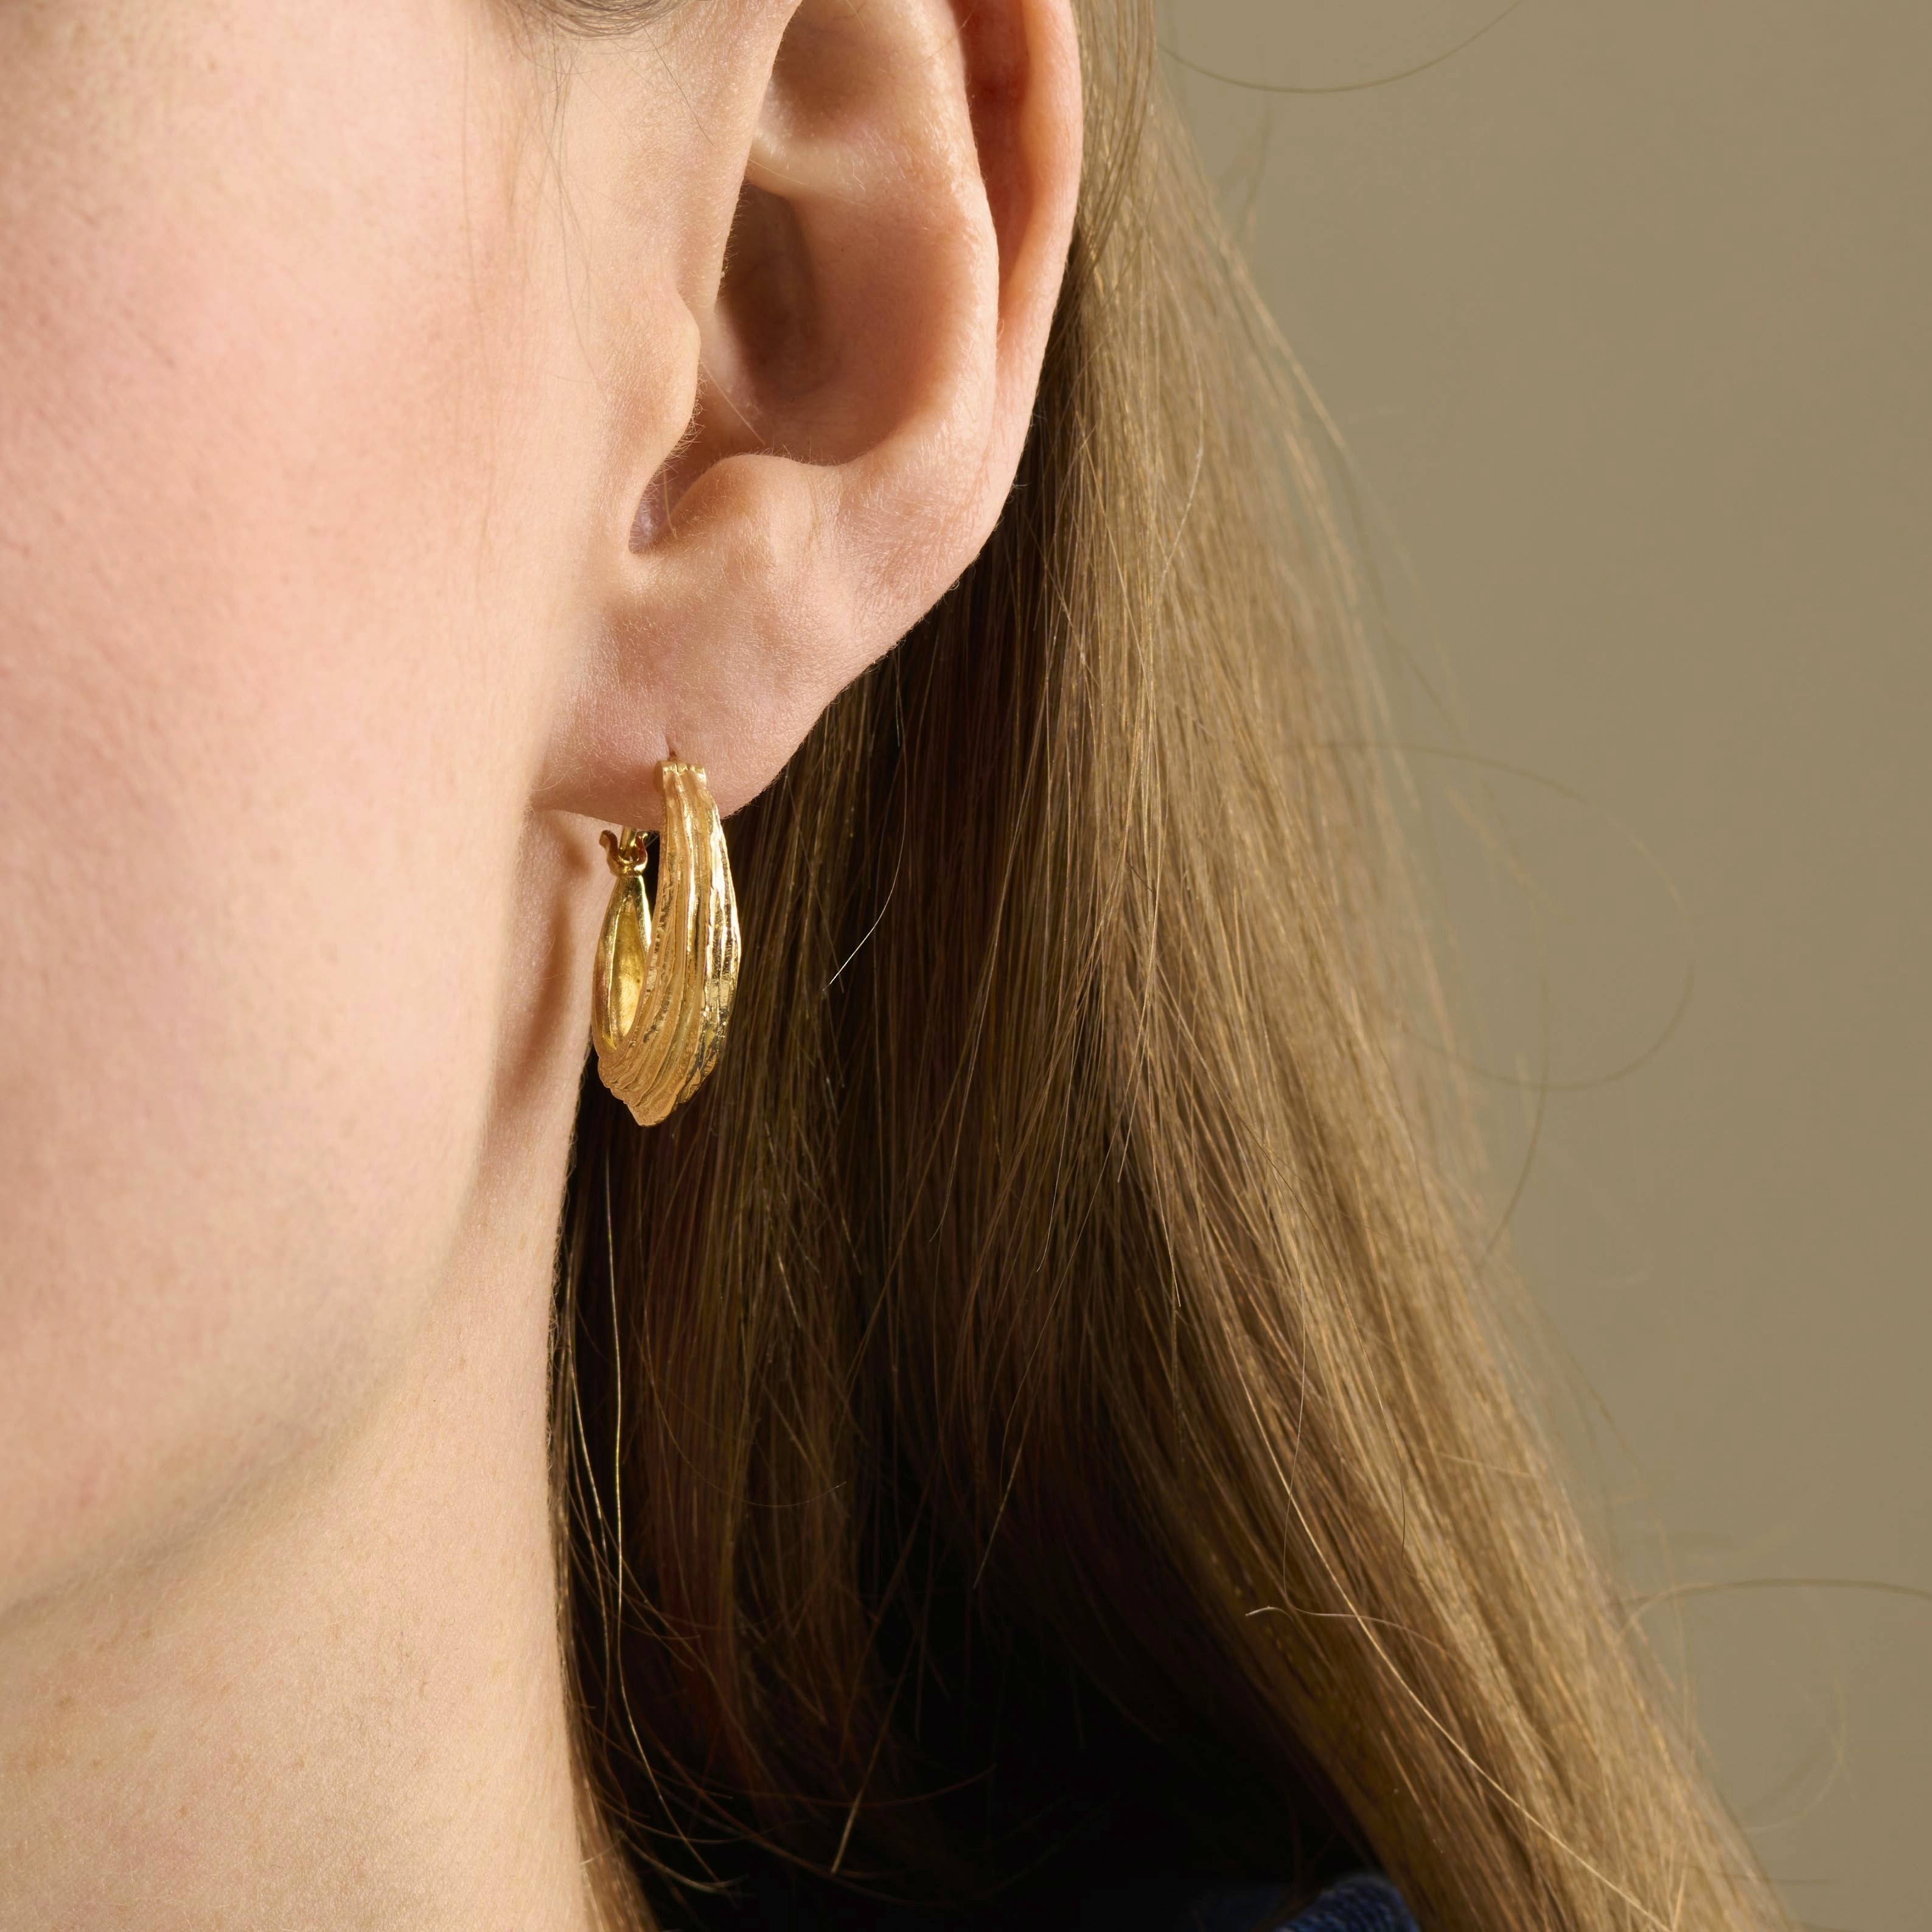 Coastline Earrings from Pernille Corydon in Goldplated-Silver Sterling 925